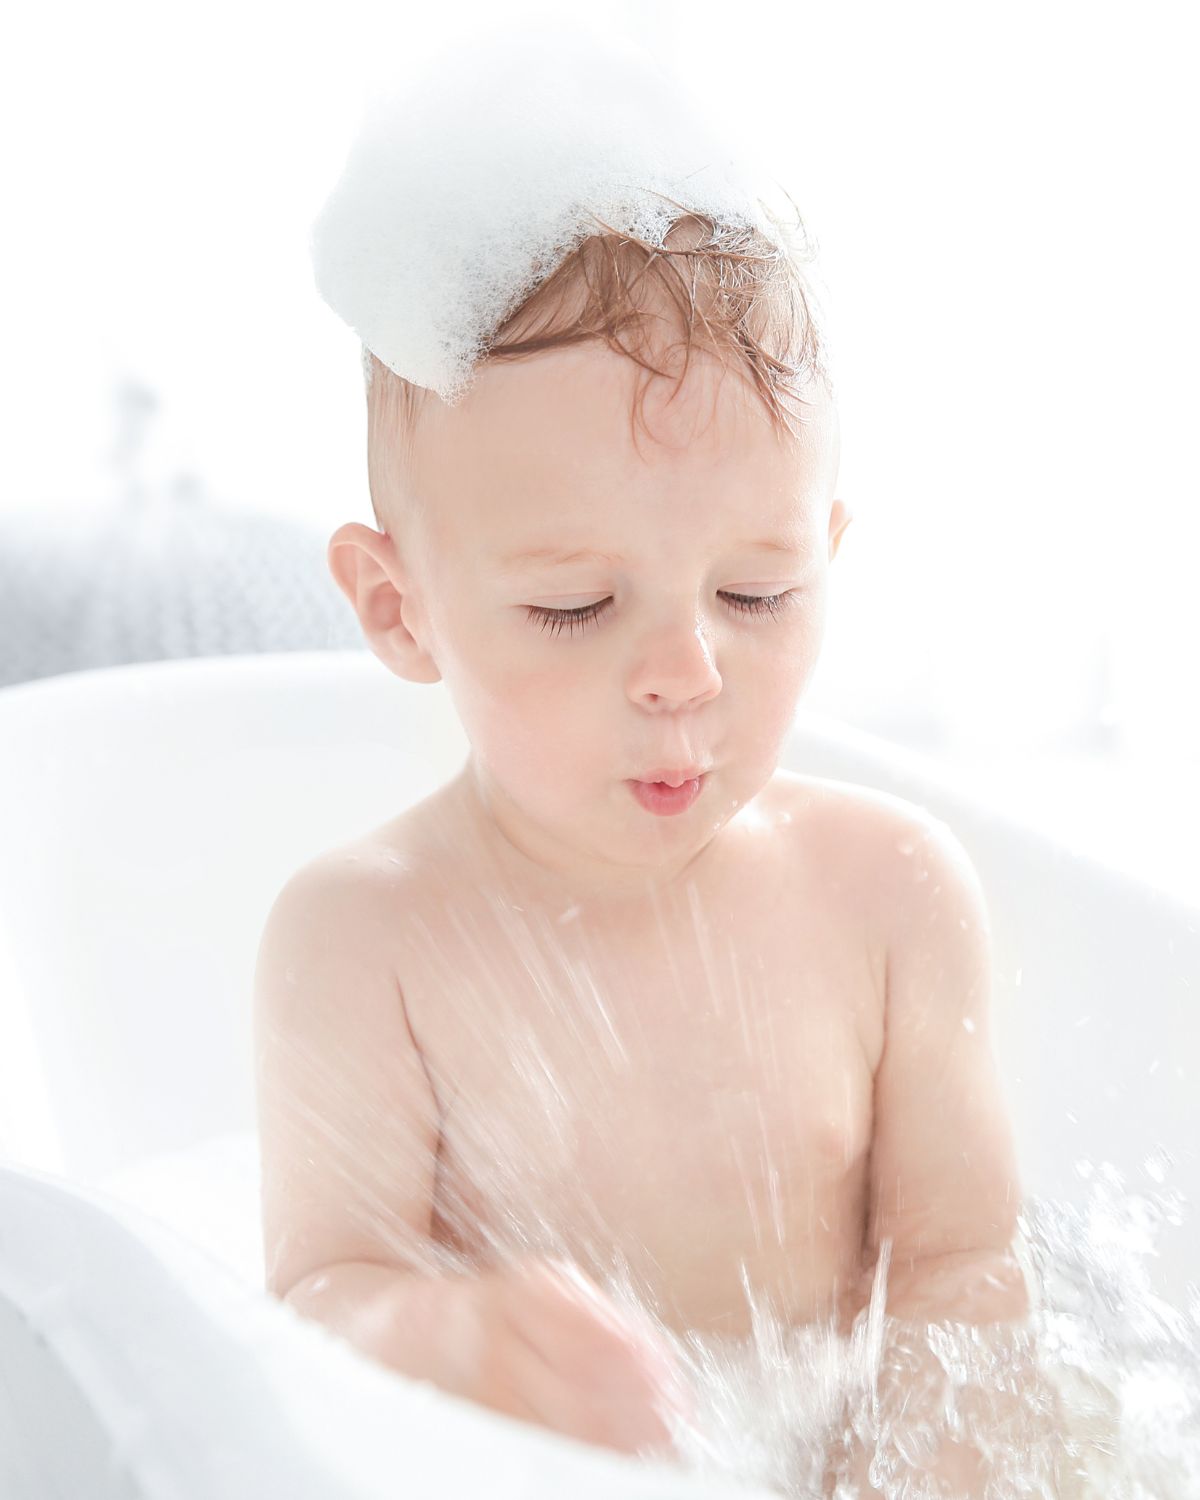 https://www.gentlenursery.com/wp-content/uploads/2021/04/non-toxic-baby-bathtubs.jpg